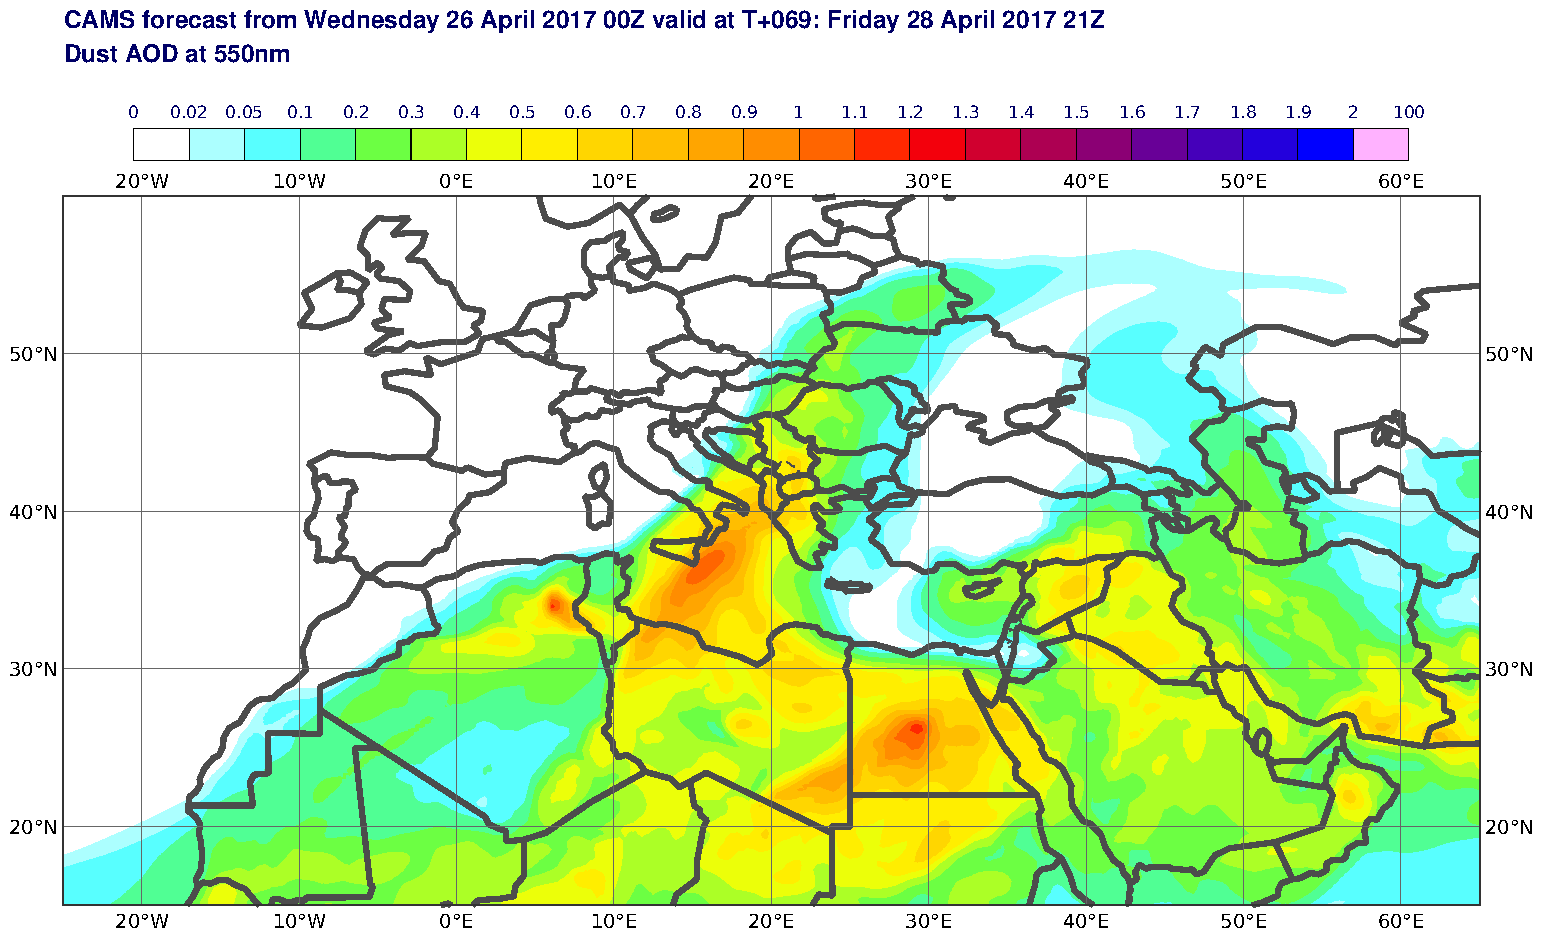 Dust AOD at 550nm valid at T69 - 2017-04-28 21:00